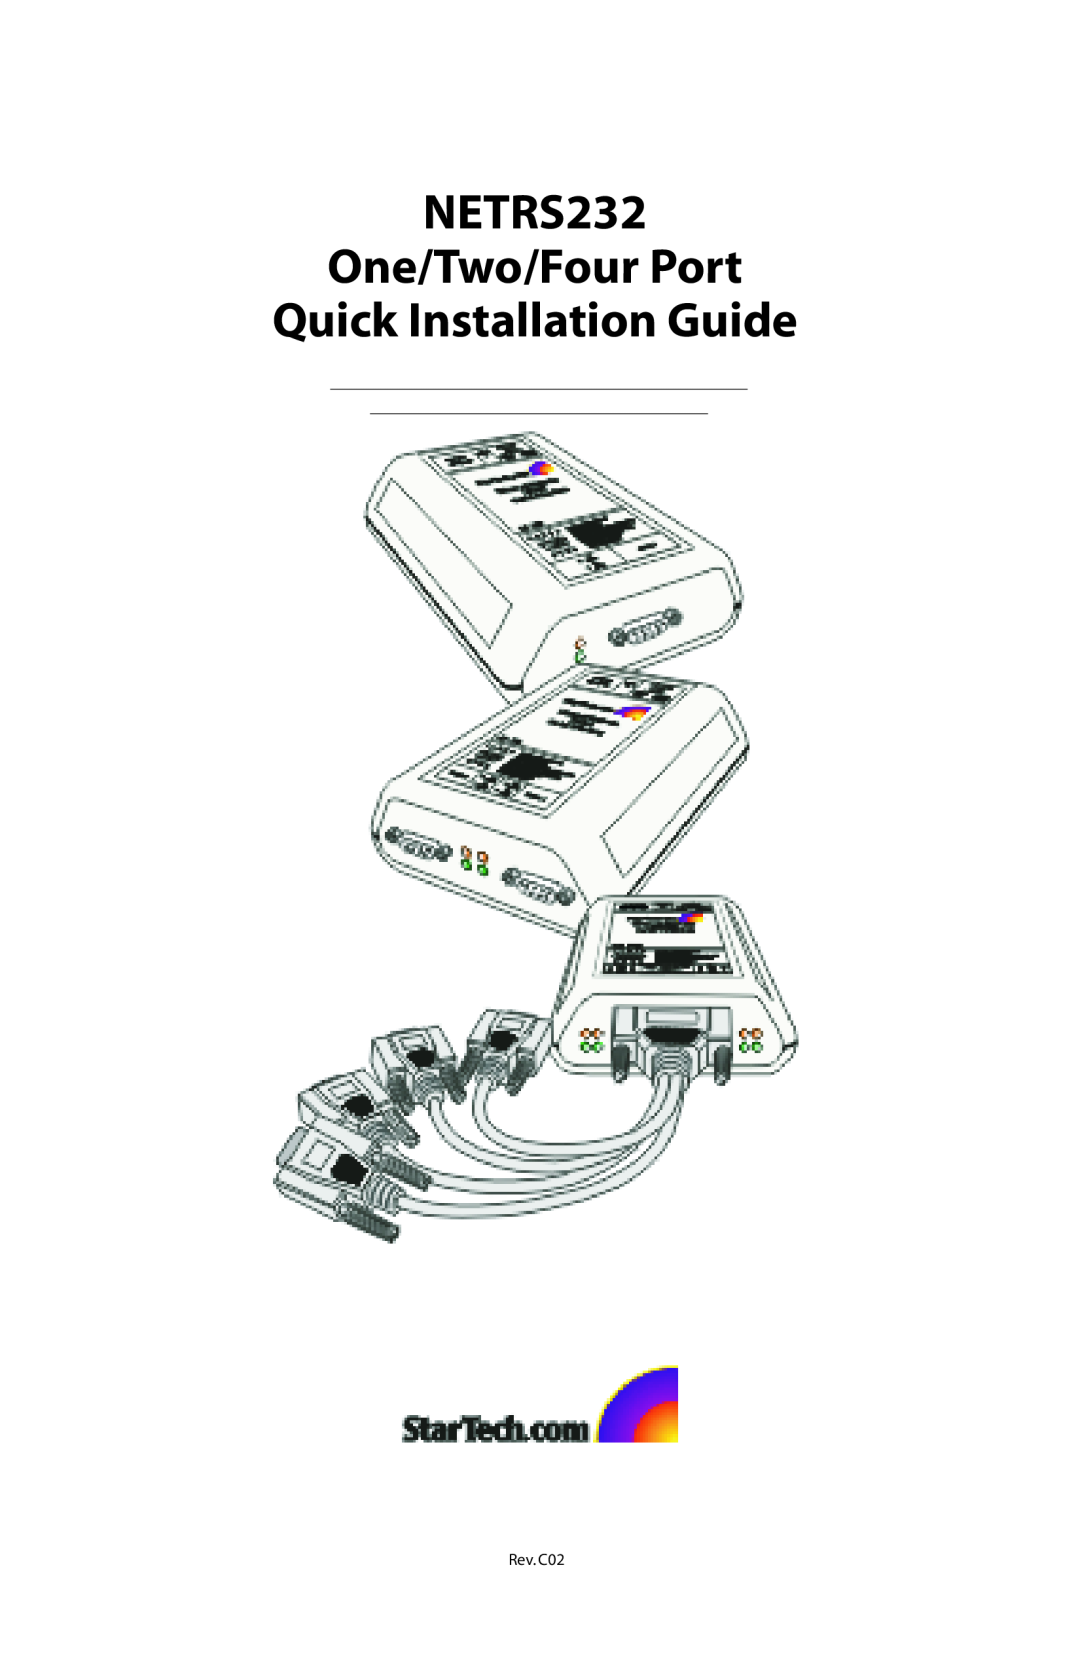 StarTech.com manual NETRS232 One/Two/Four Port Quick Installation Guide, Rev. C02 